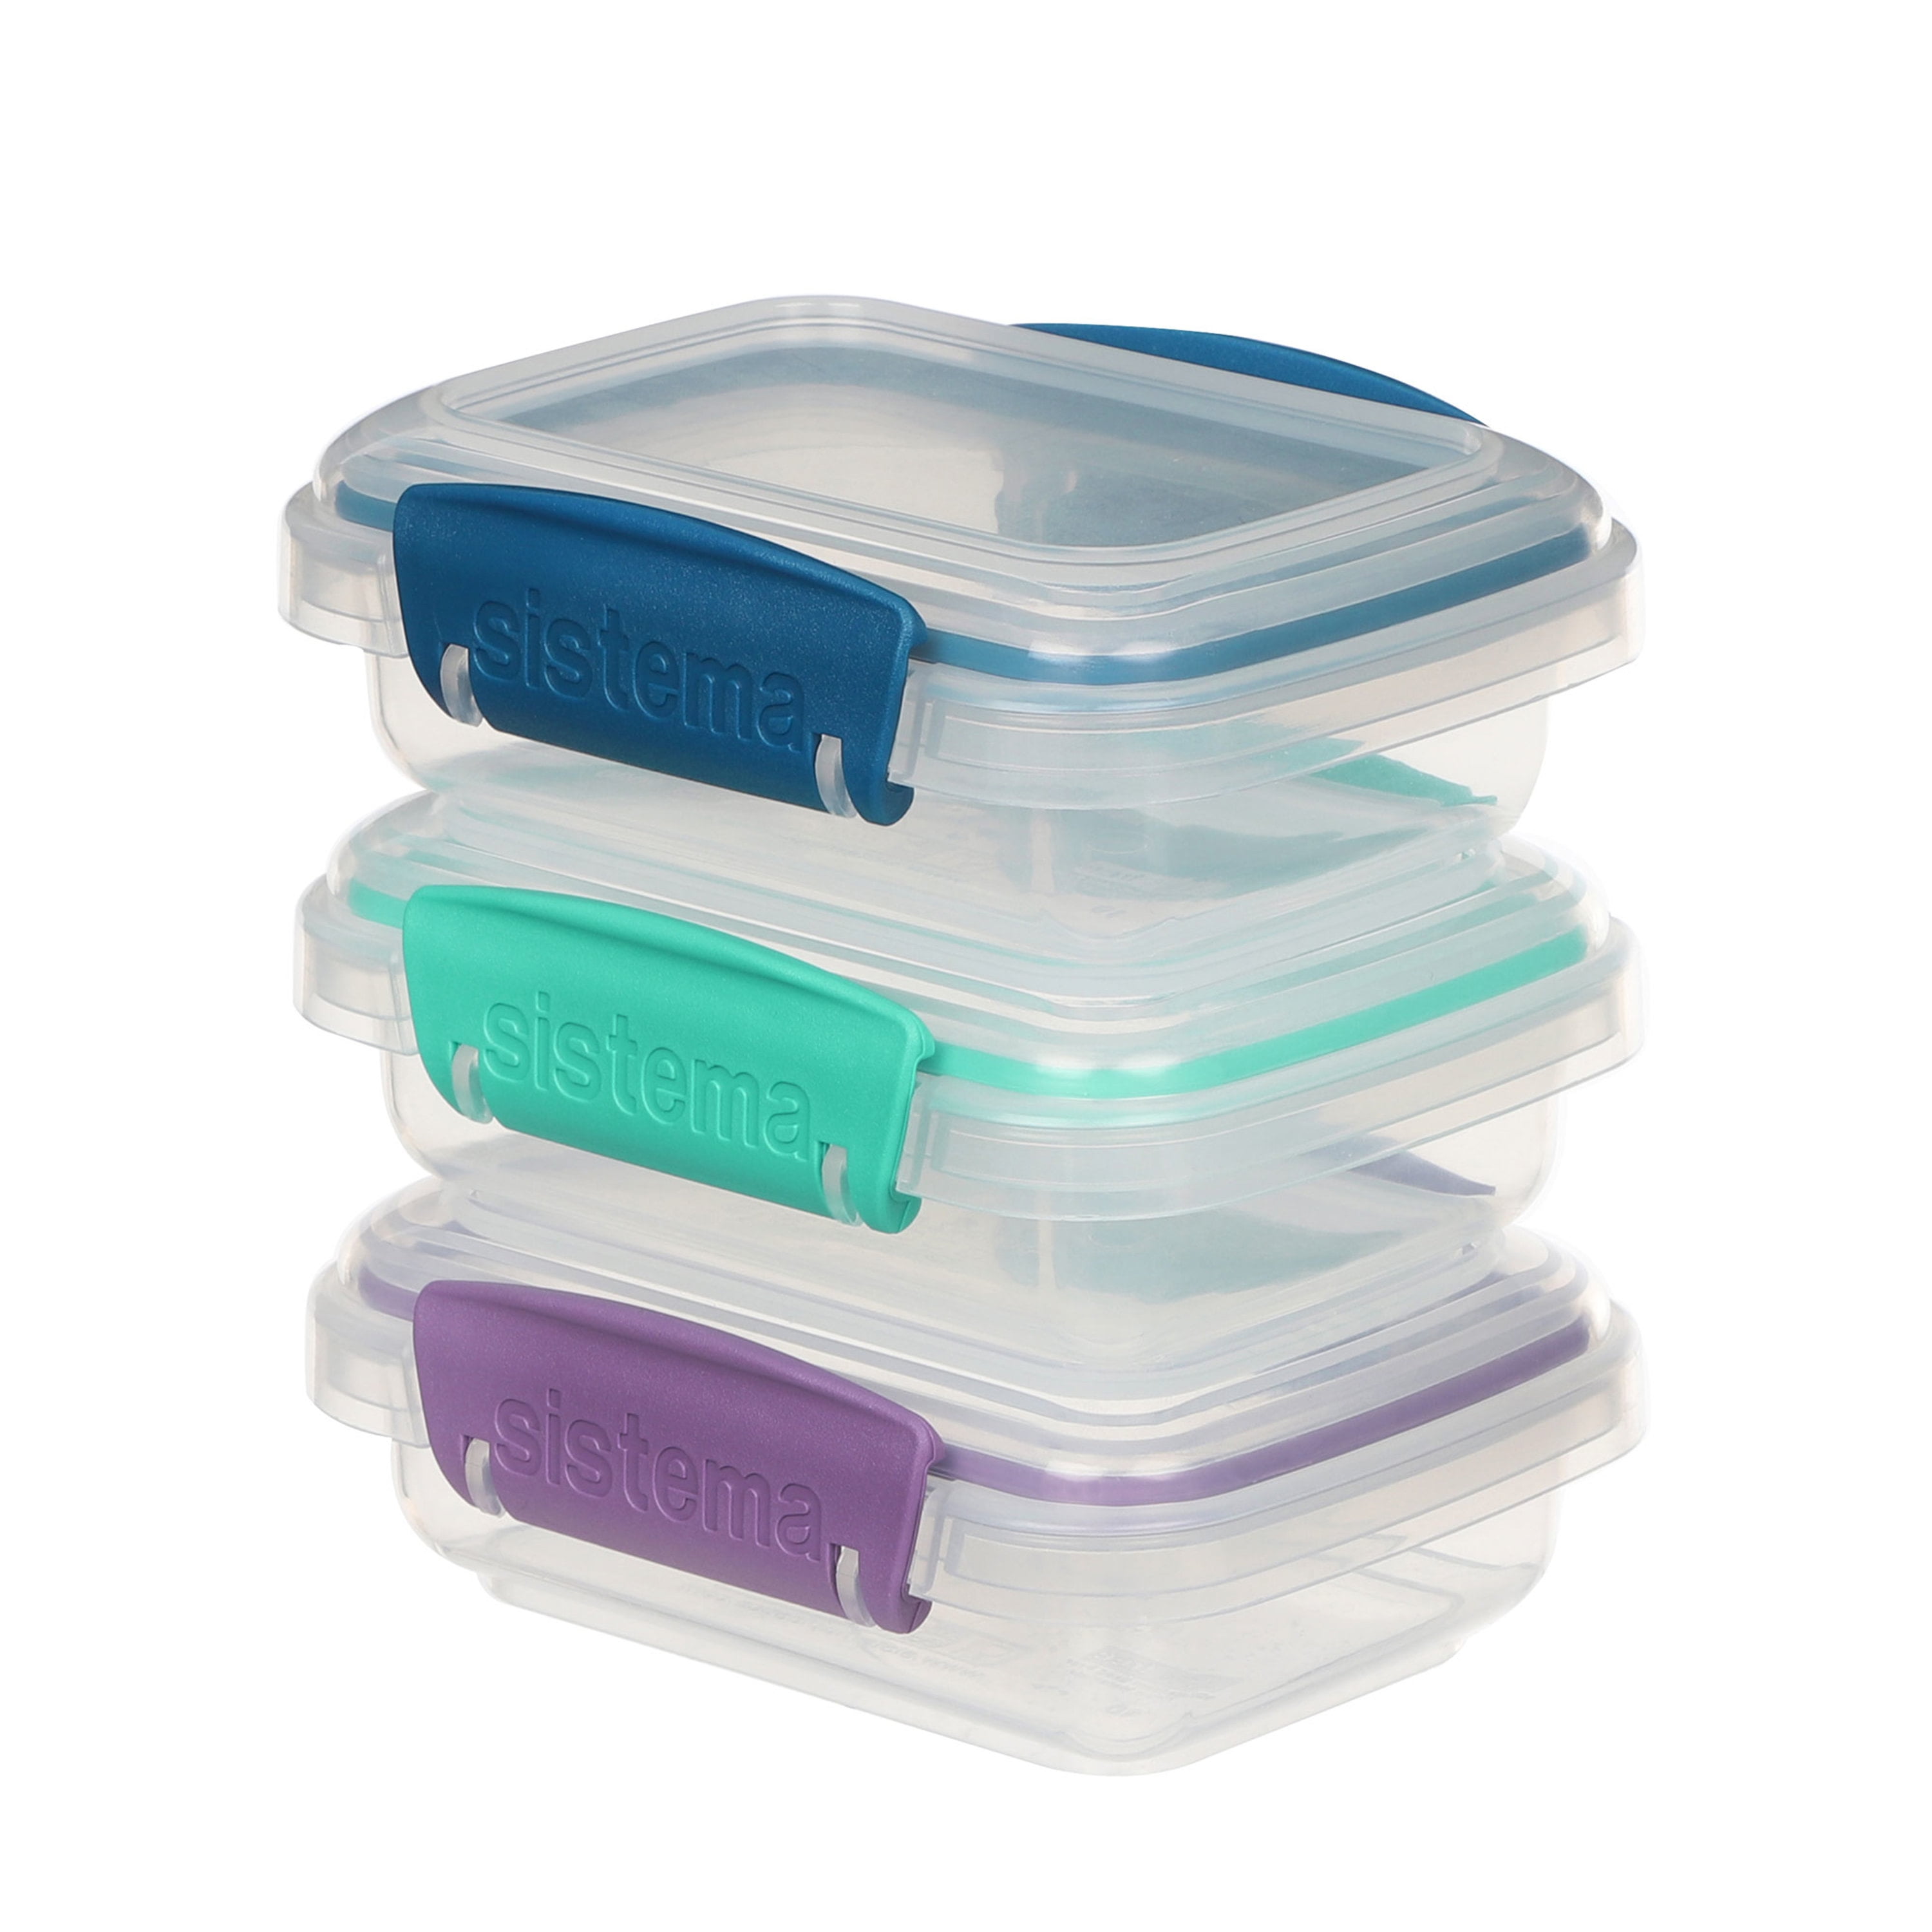 Sistema KLIP ITS Lunch Food Storage Container BLUE 200 ml 6.76 oz